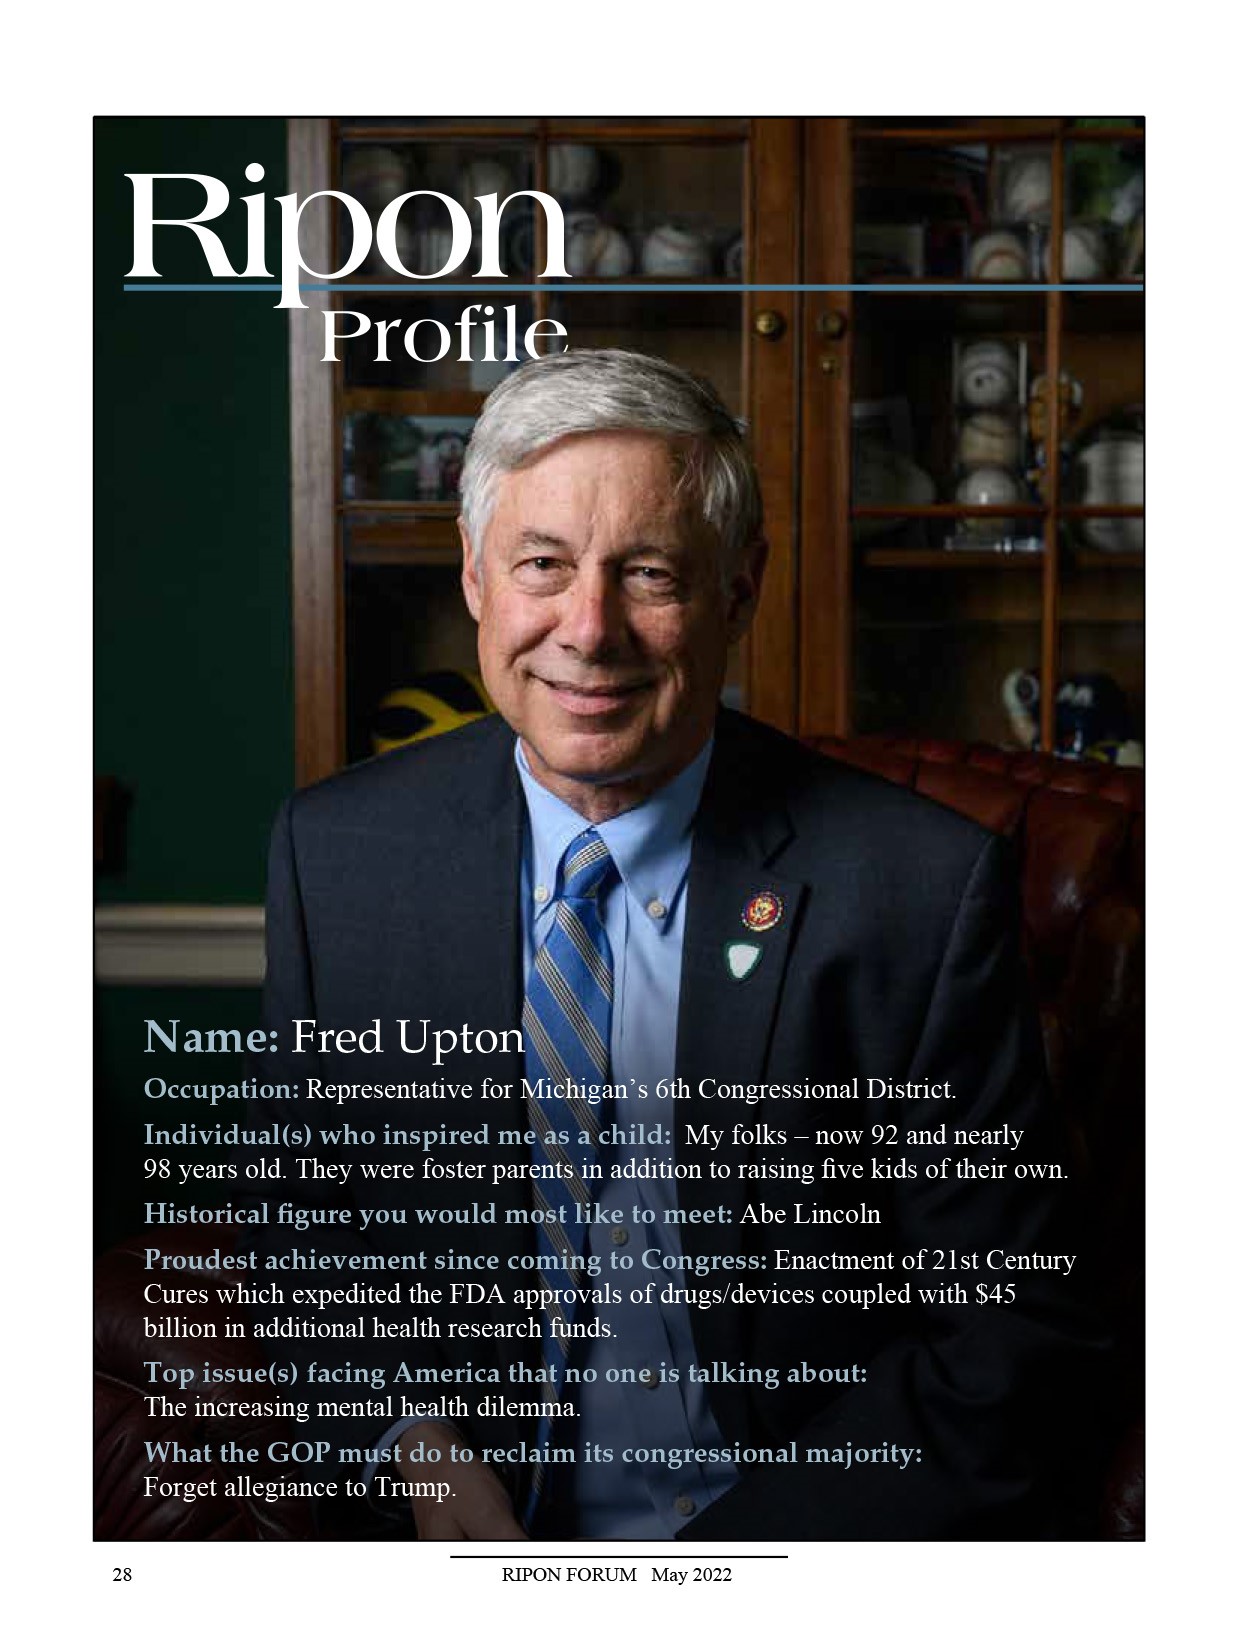 Ripon Profile of Fred Upton